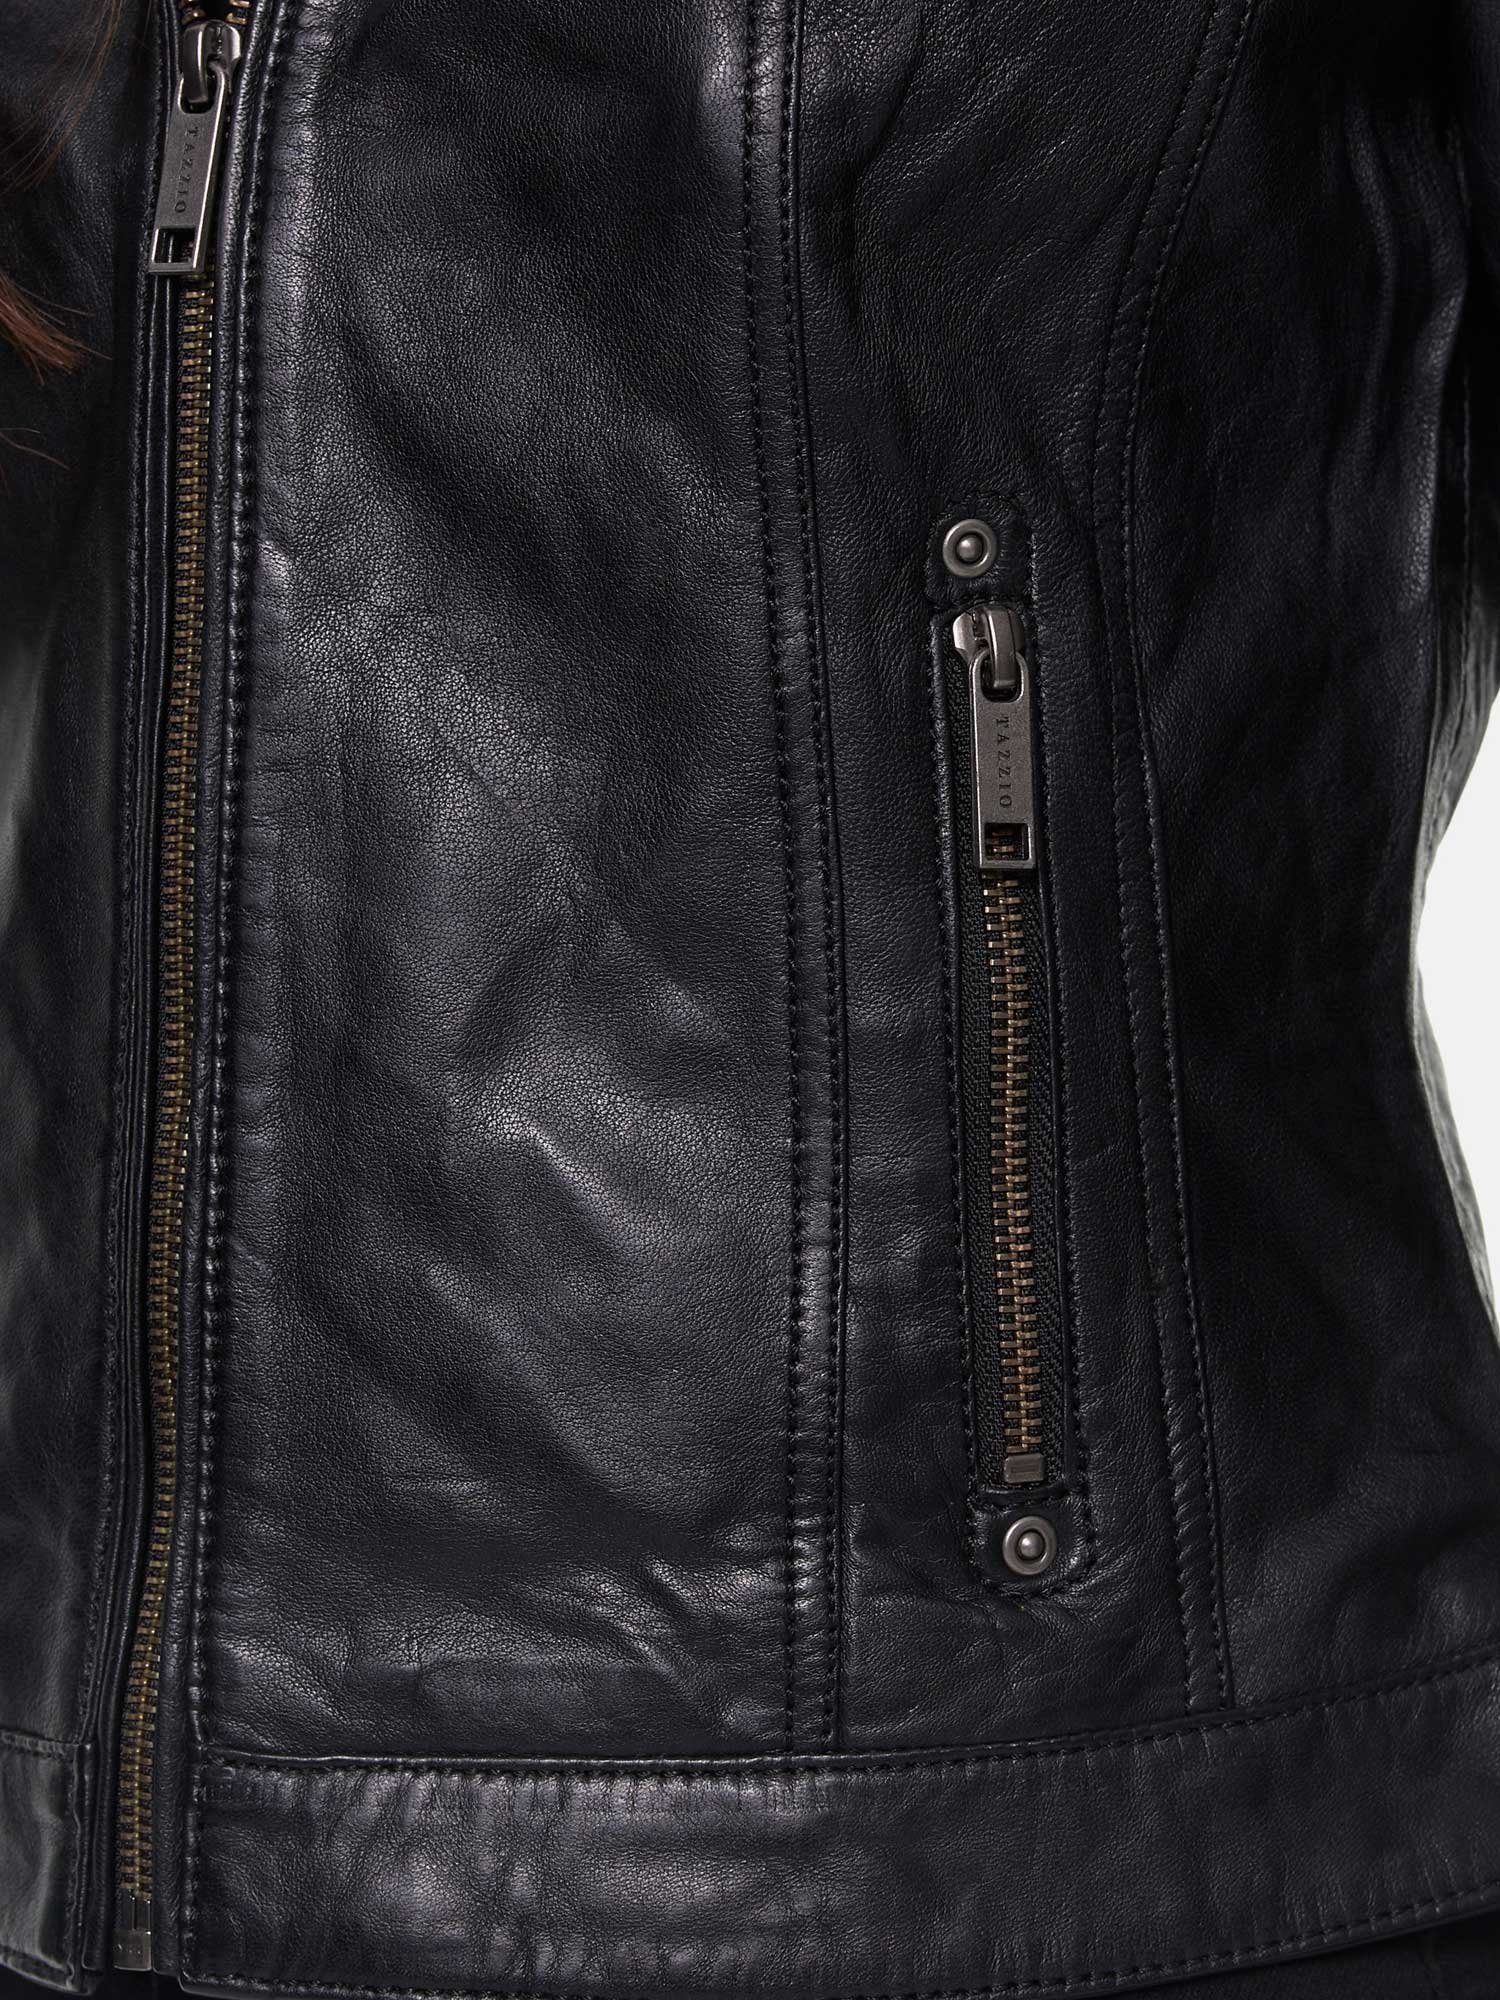 schwarz Tazzio Kapuze Lederjacke Leder mit abnehmbarer Jacke F503 Damen im Biker Look